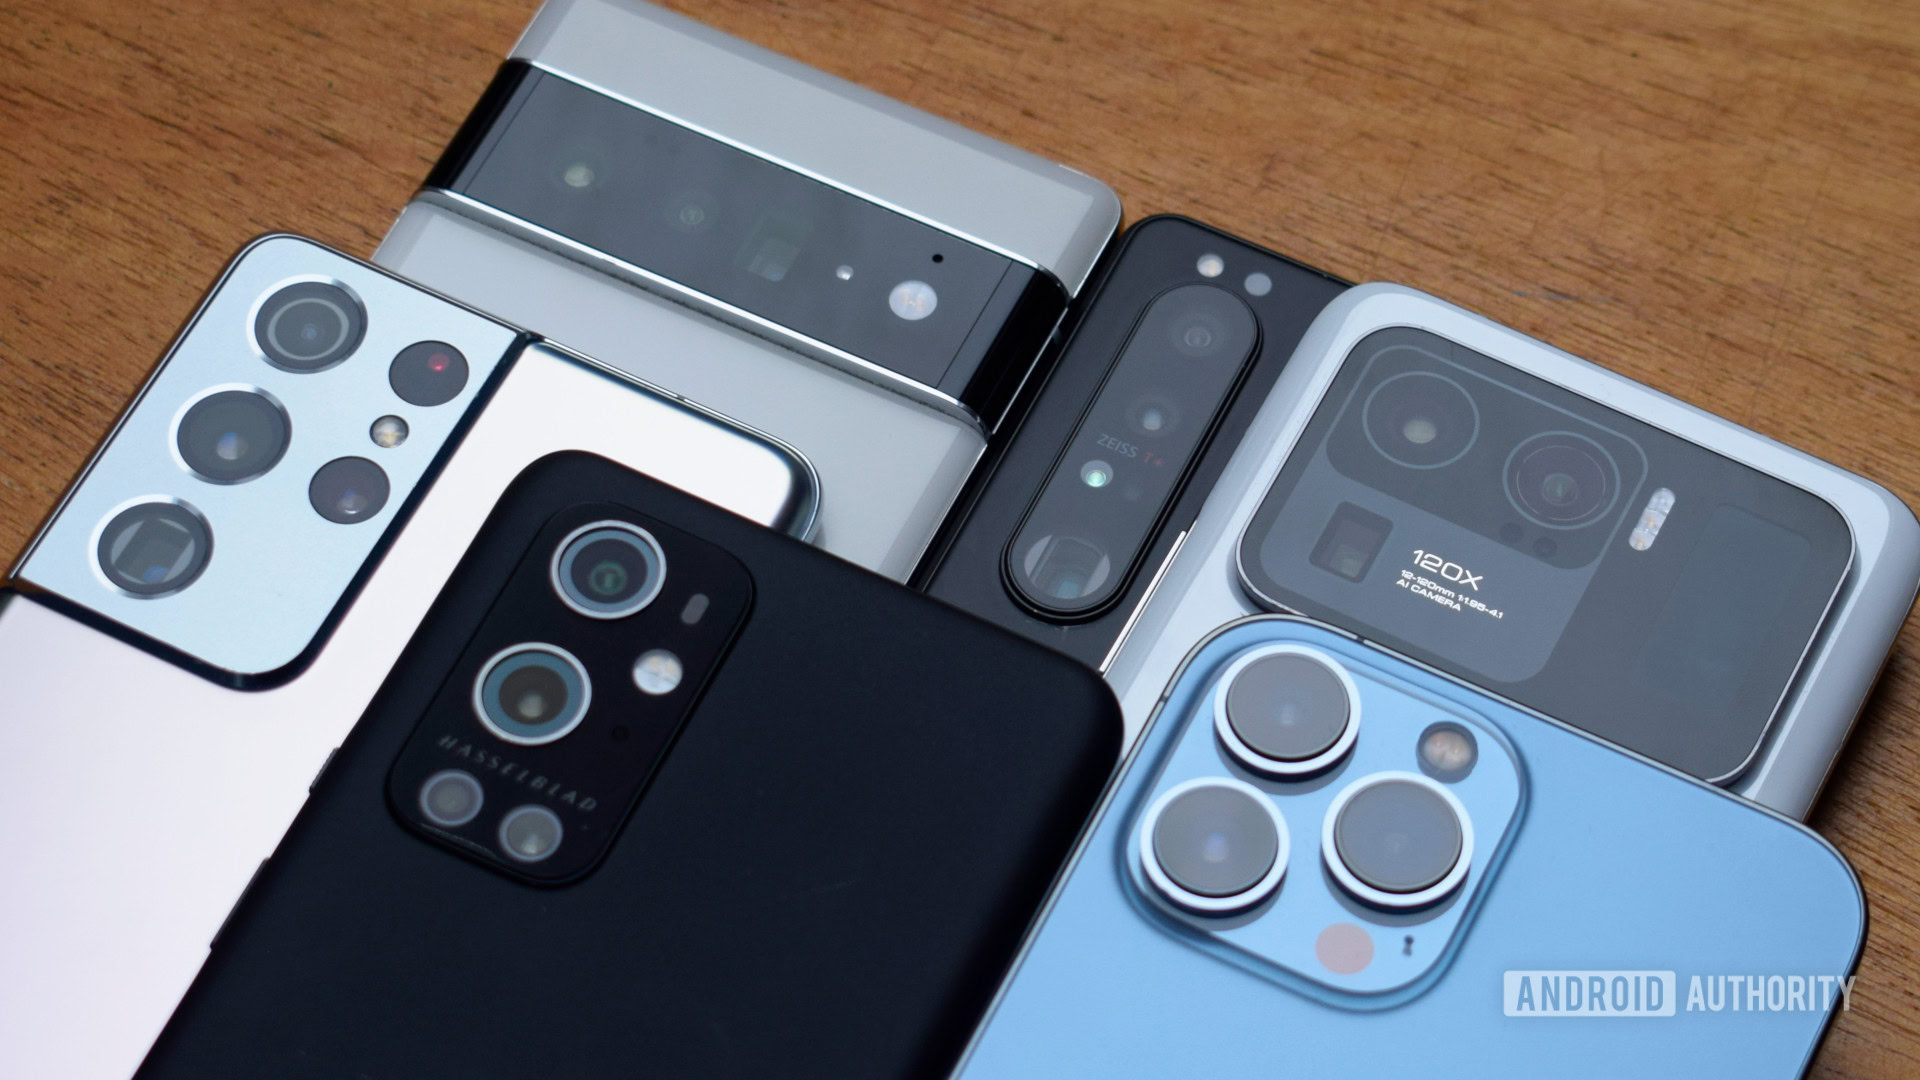 Best Smartphone Cameras 2021 mixed up - Apple iPhone 13 Pro Max, Google Pixel 6 Pro, OnePlus 9 Pro, Samsung Galaxy S21 Ultra, Sony Xperia 1 III, Xiaomi Mi 11 Ultra